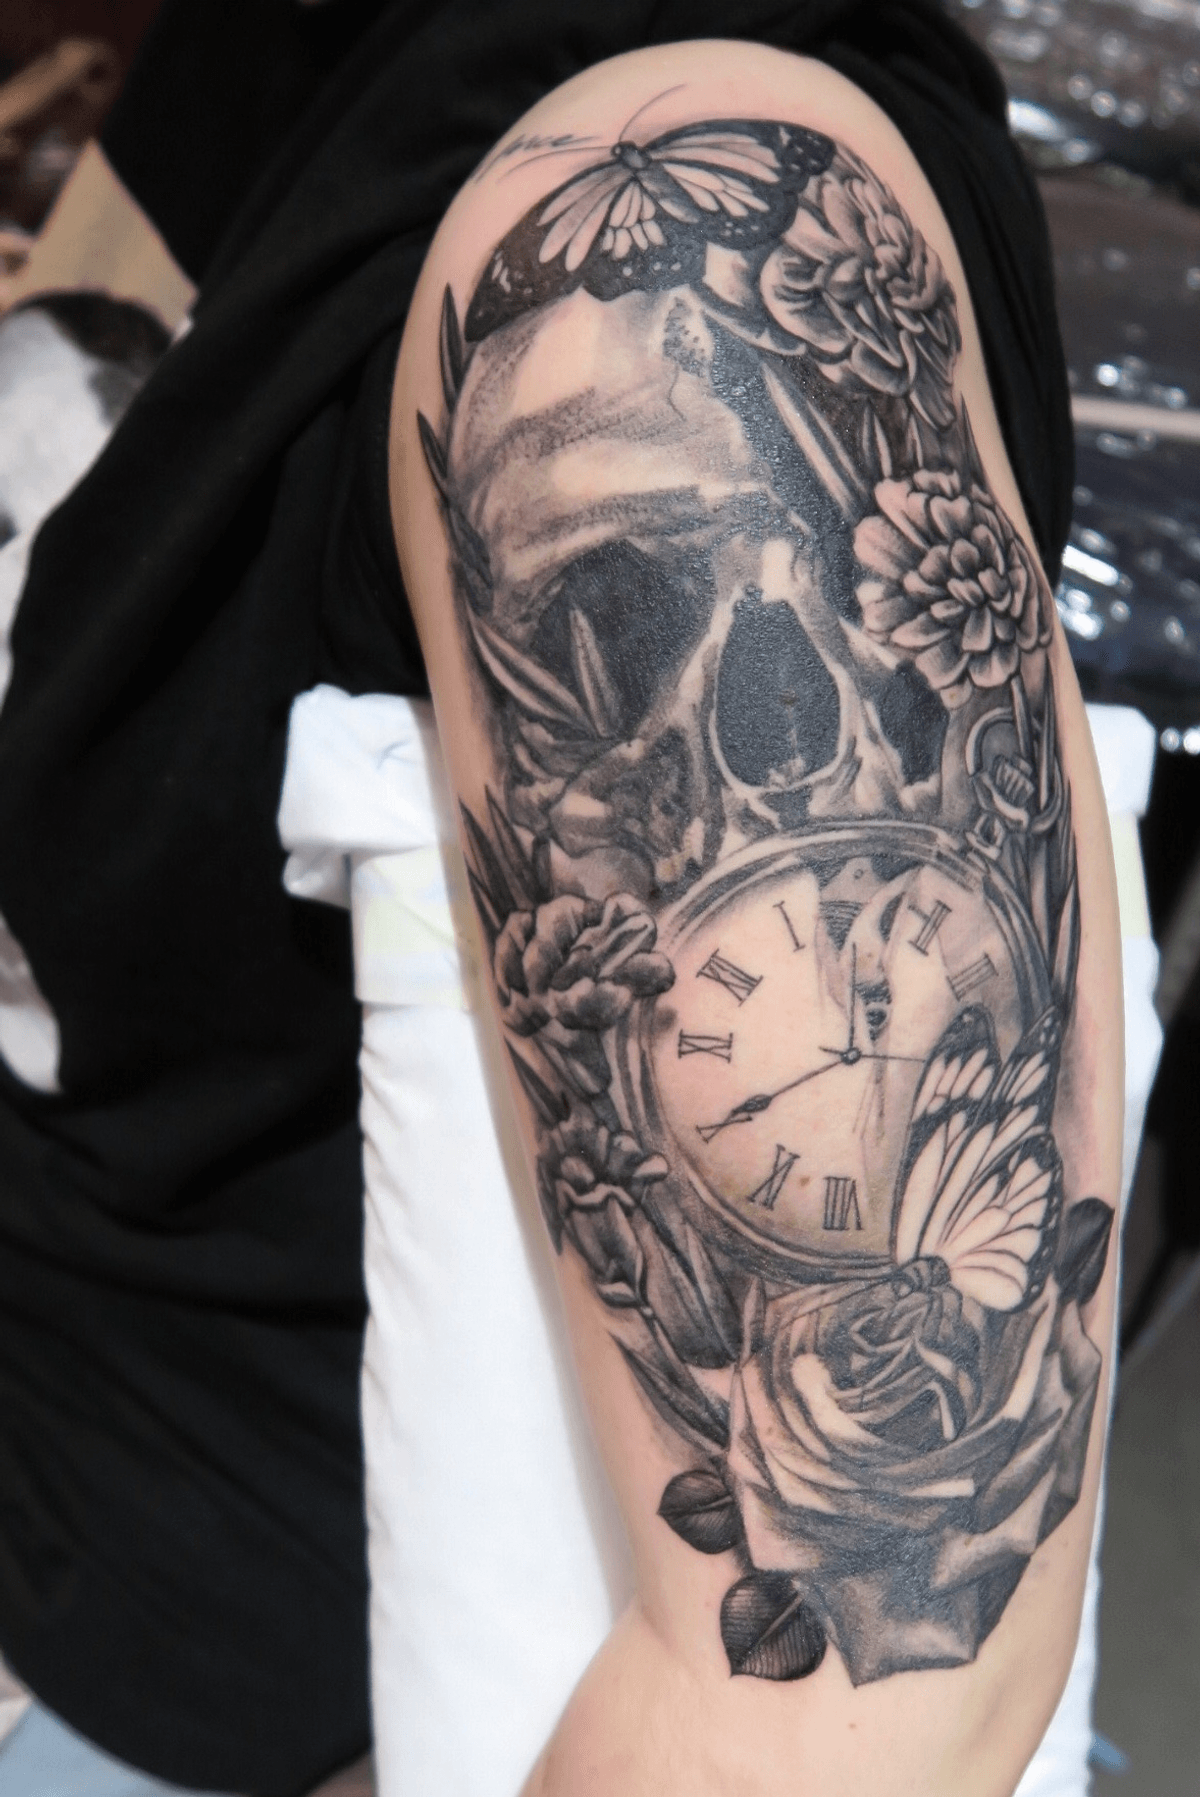 Tattoo uploaded by Jbrennantattoo • Half sleeve from the